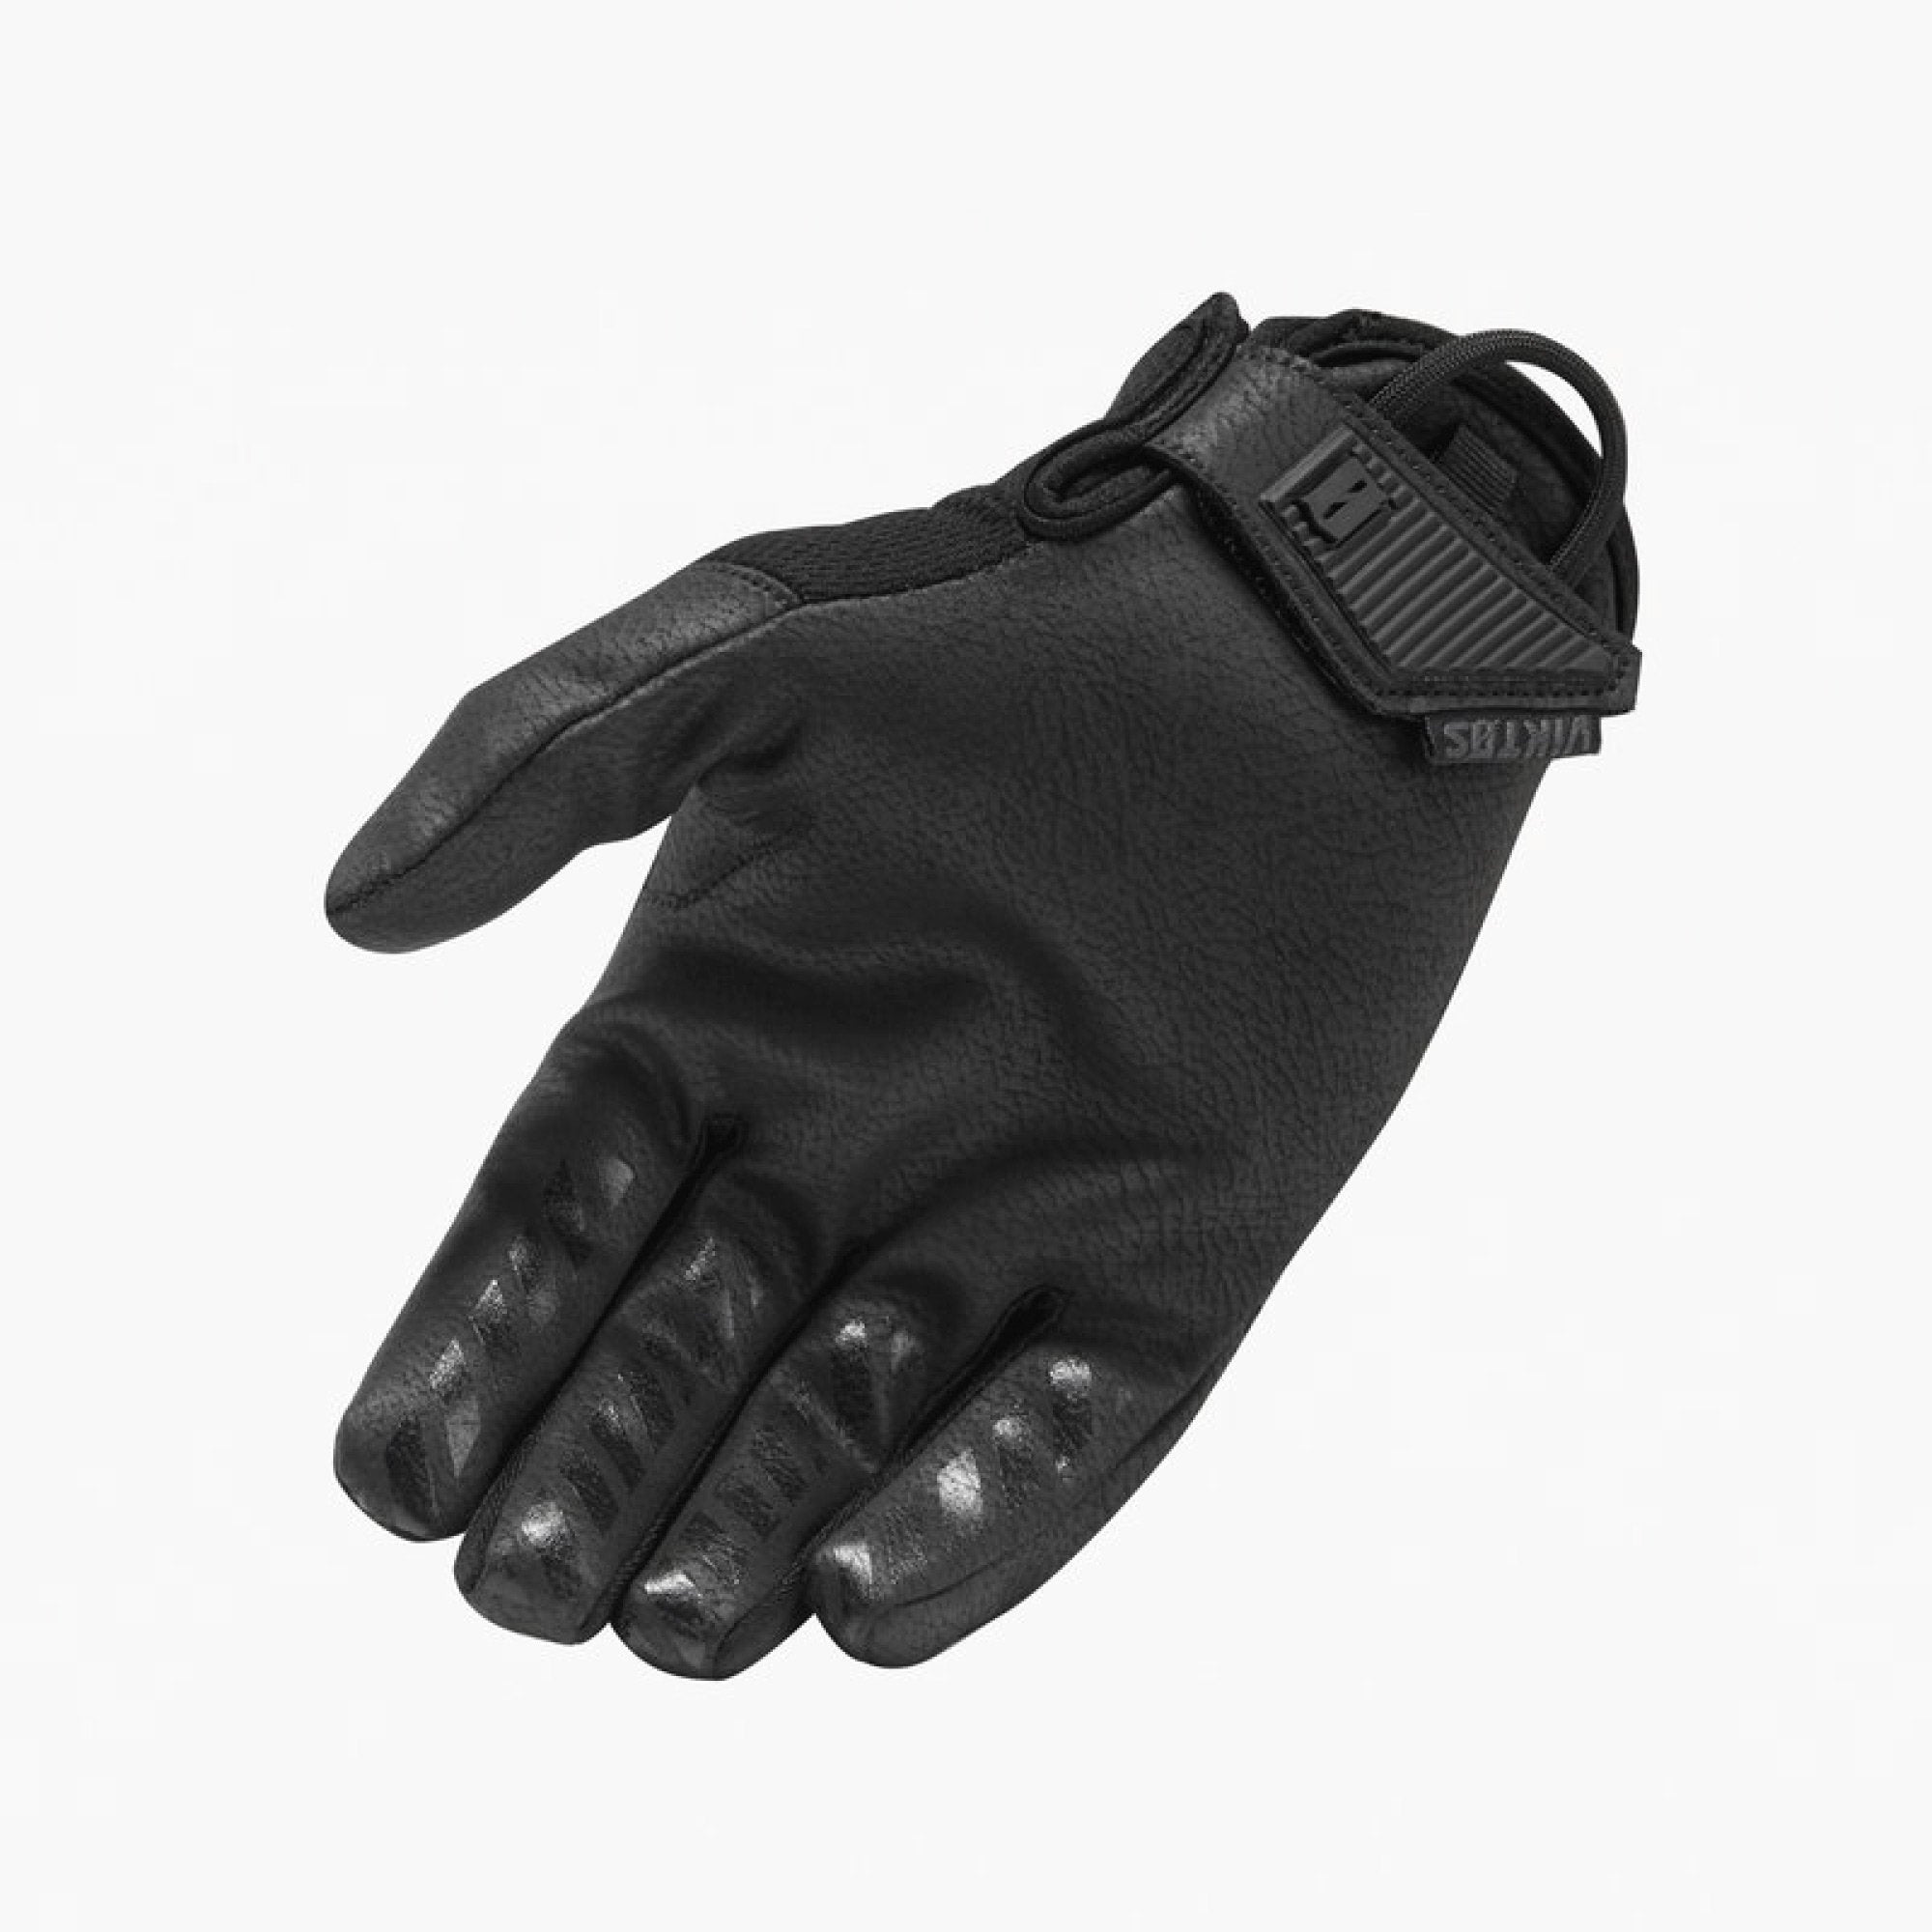 VIKTOS LEO Vented Duty Gloves Nightfjall Gloves VIKTOS Tactical Gear Supplier Tactical Distributors Australia